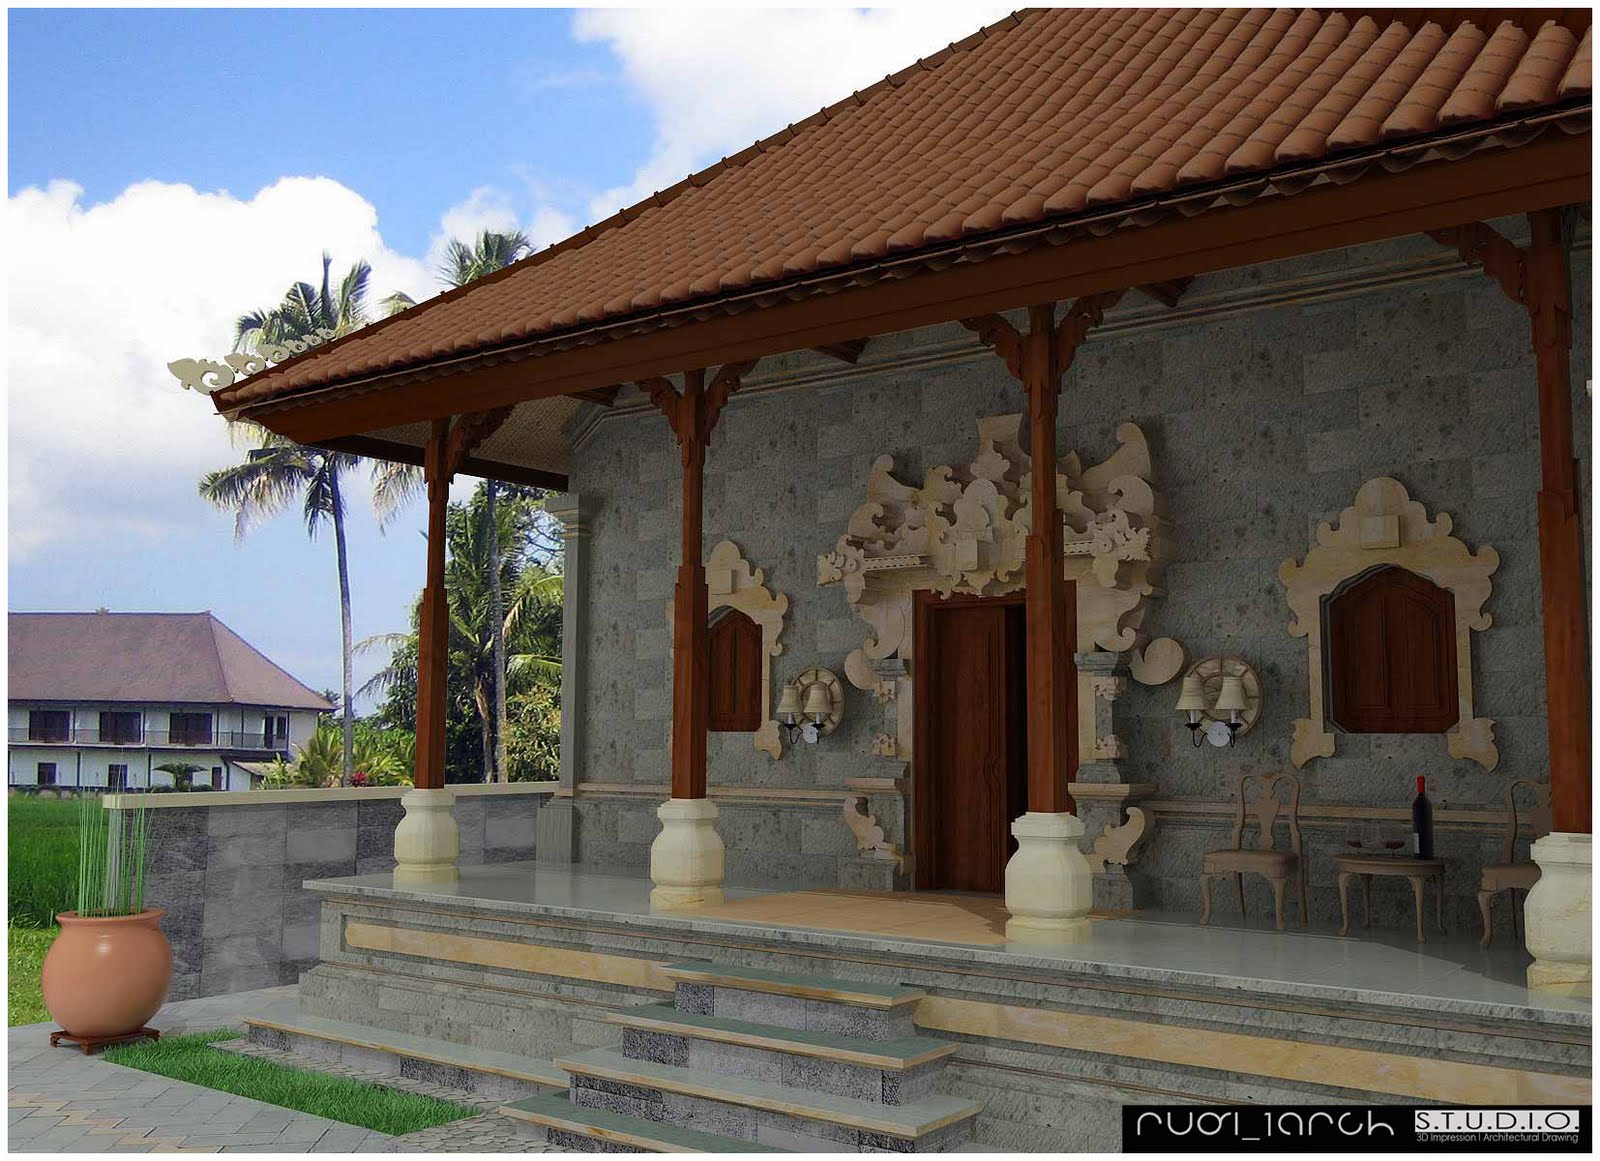 Rudi_1arch Studio: My Bale Daja_Penarukan, Tabanan - Bali